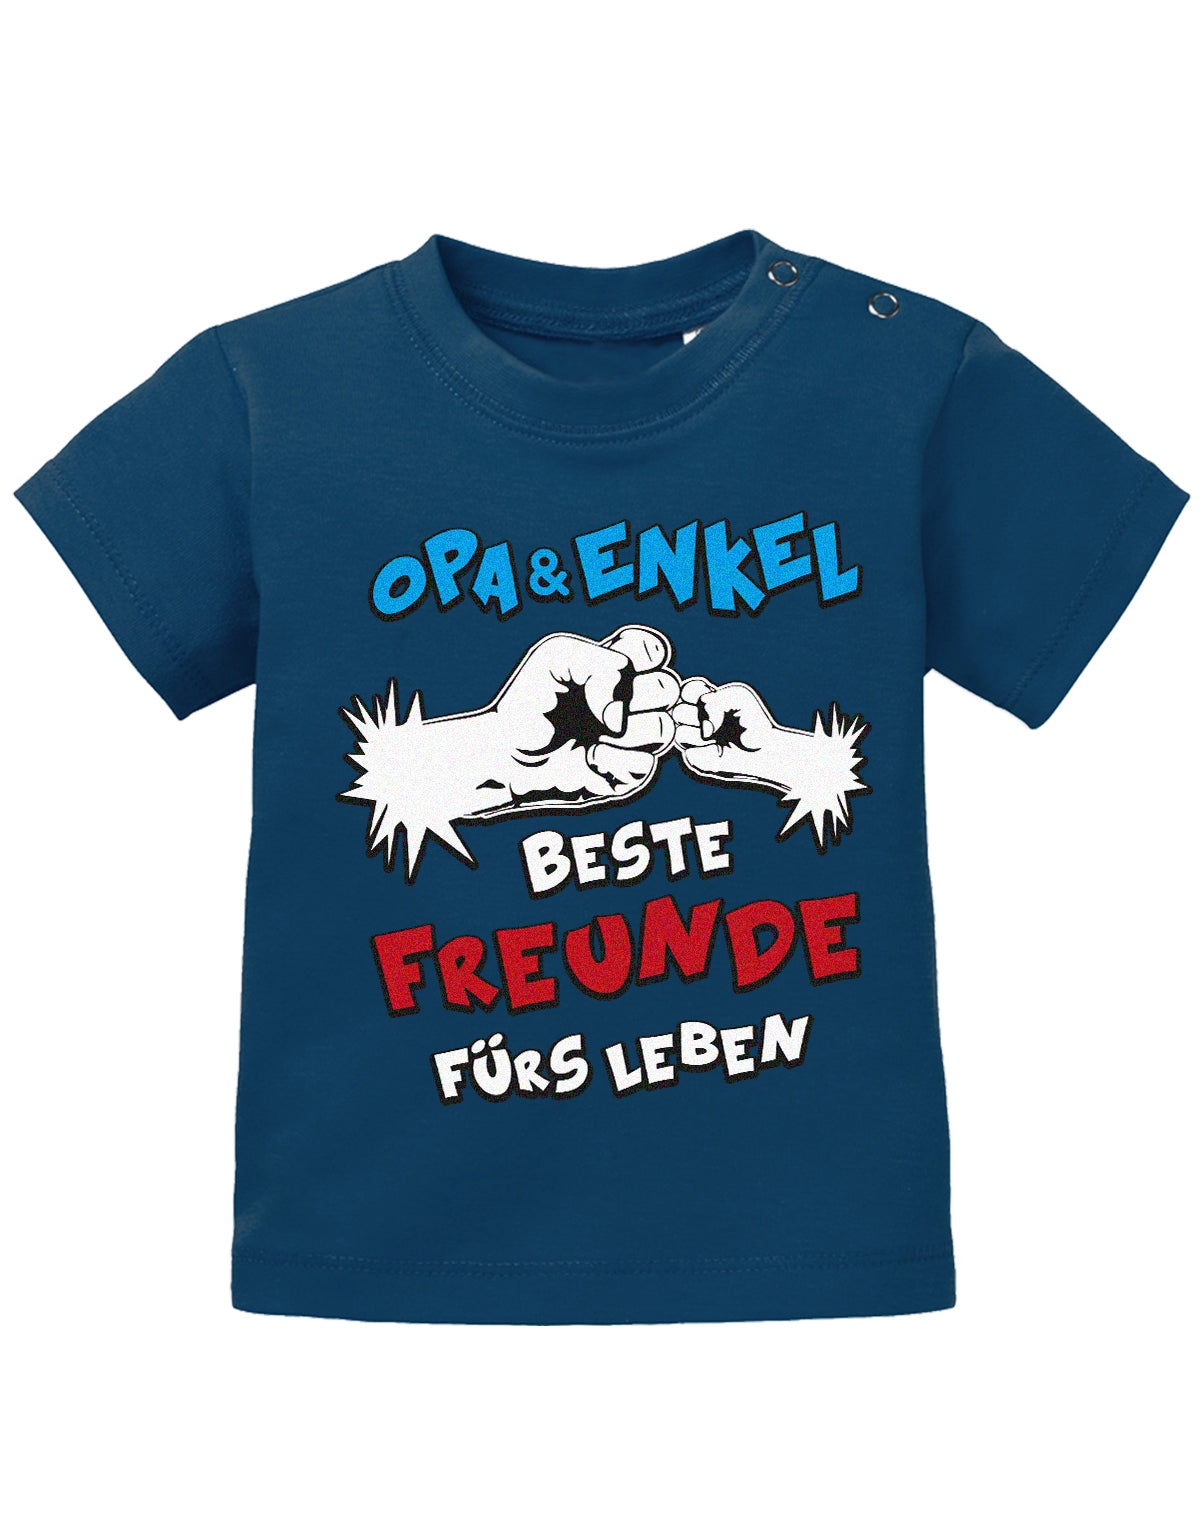 Opa Spruch Baby Shirt. Opa und Enkel Beste Freude fürs Leben. Faust an Faust. navy